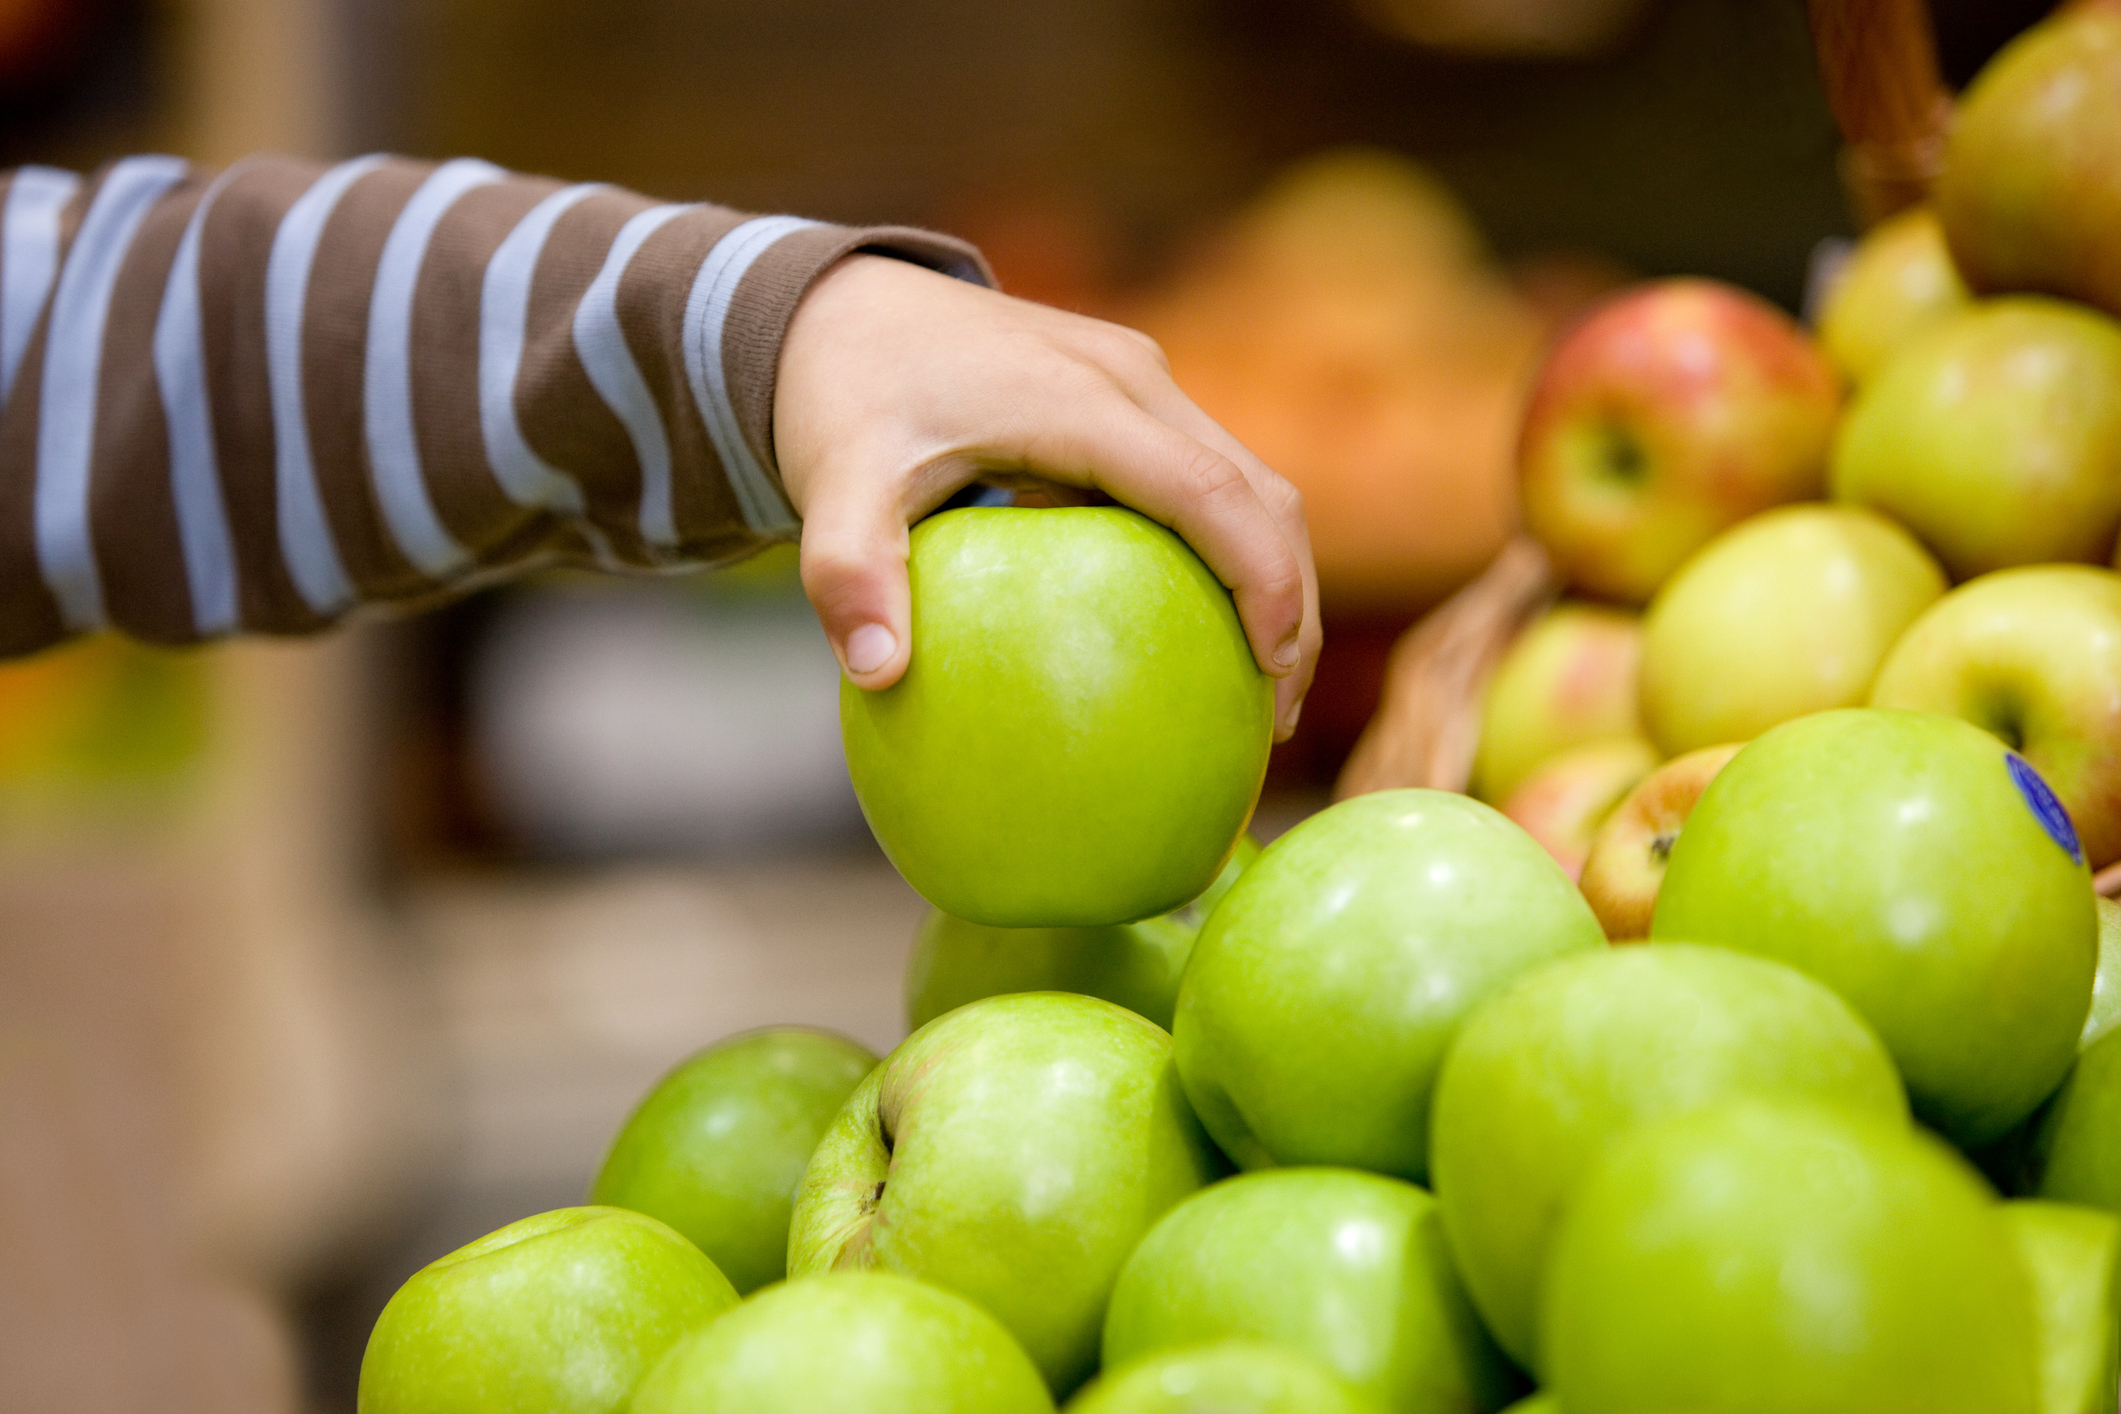 https://www.foodnavigator.com/var/wrbm_gb_food_pharma/storage/images/publications/food-beverage-nutrition/foodnavigator.com/news/science/organic-apples-good-for-gut-health-study/9960712-1-eng-GB/Organic-apples-good-for-gut-health-study.jpg